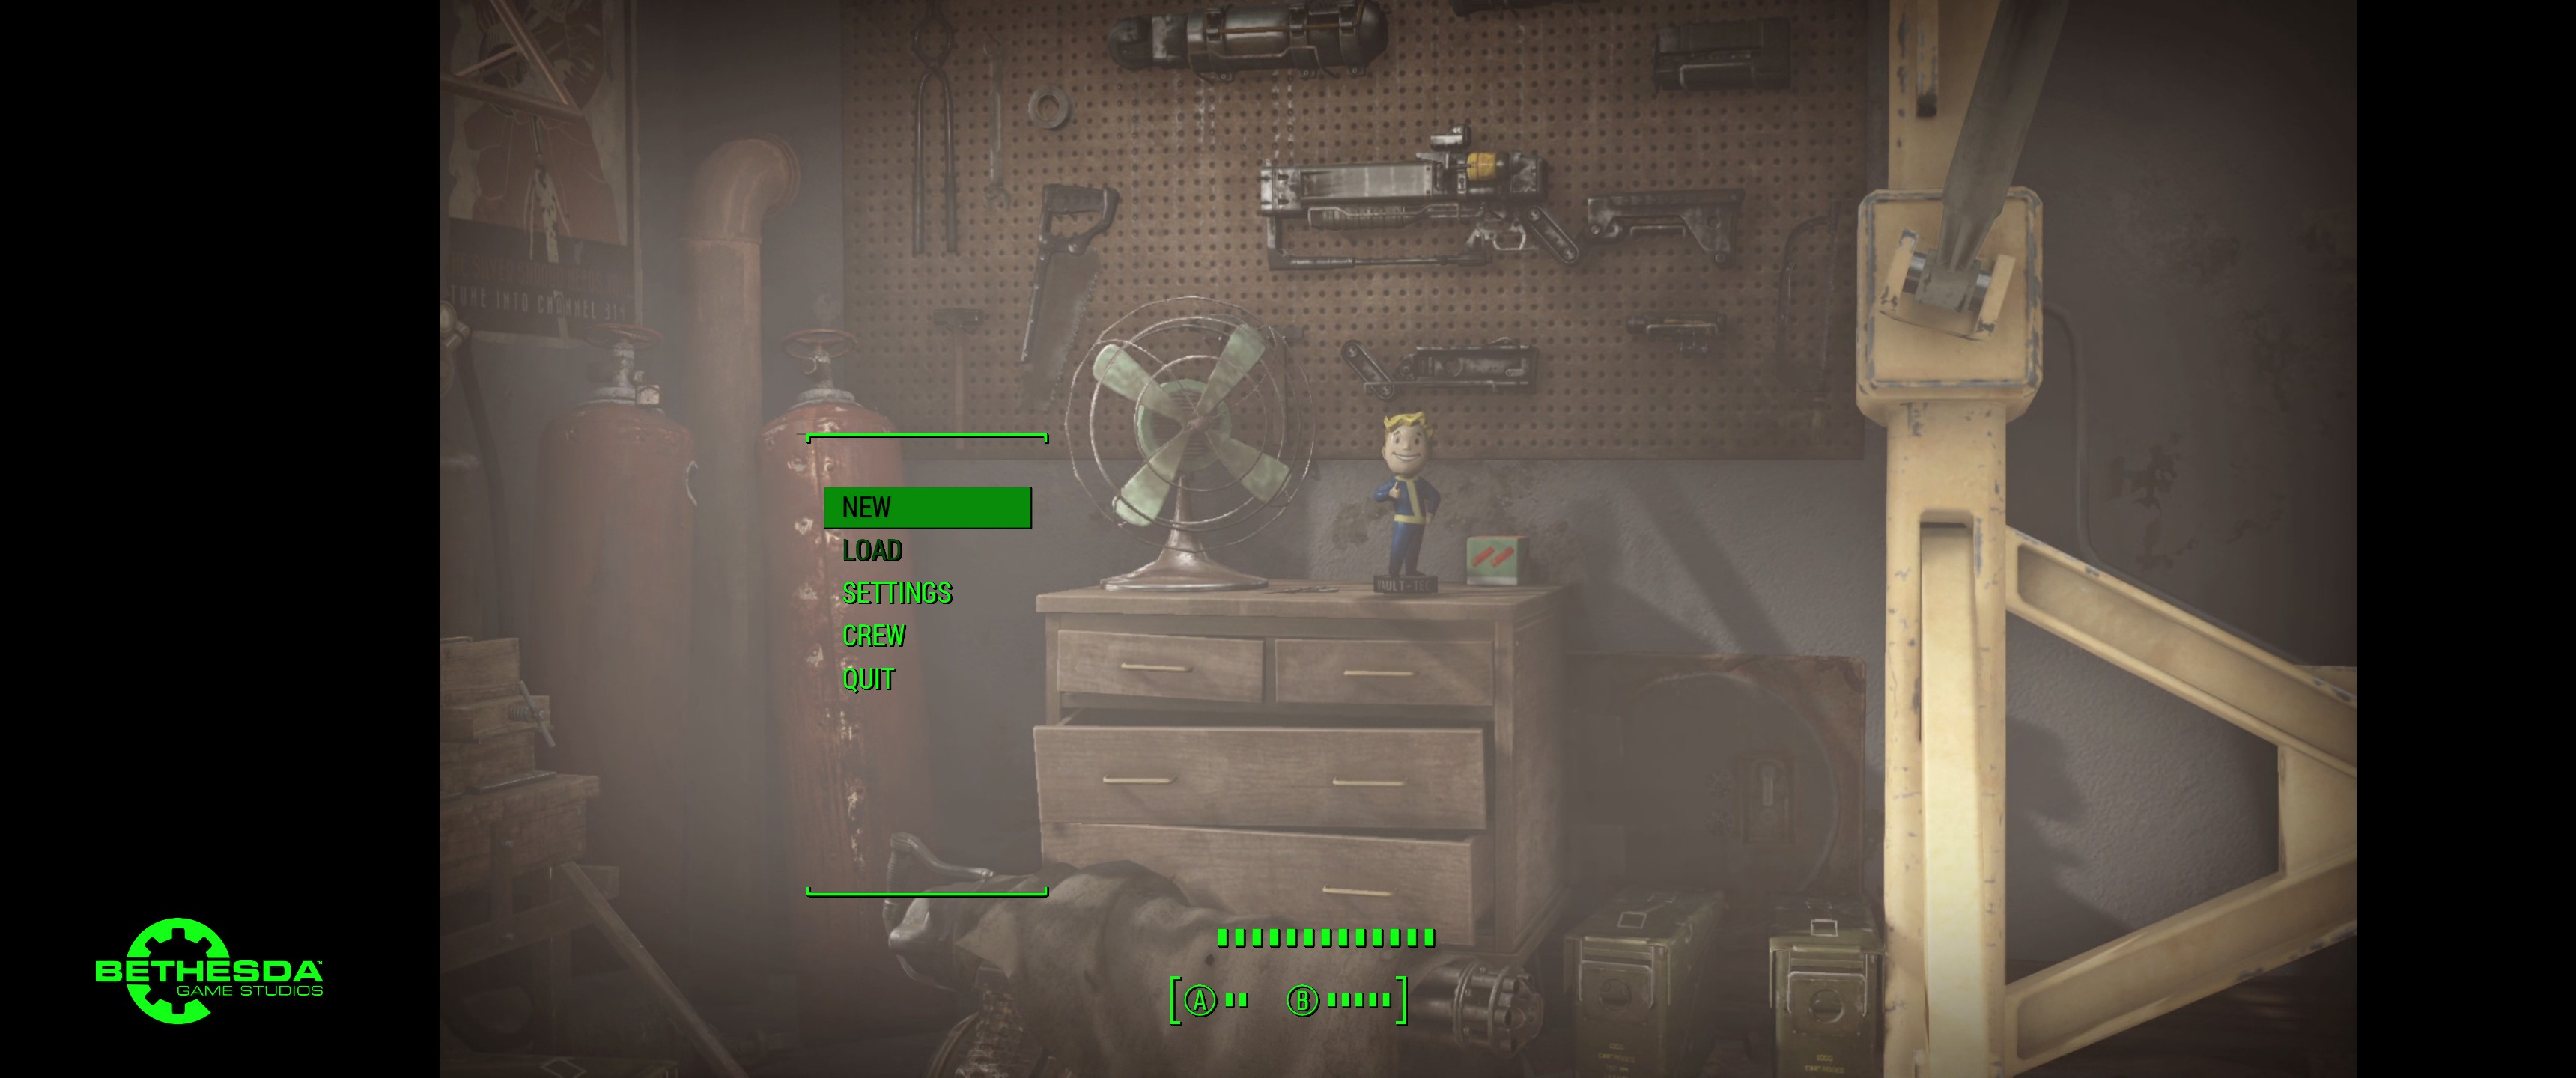 Fallout 4 Pc版 日本語版を 21 9のウルトラワイド解像度で遊ぶ方法 自作とゲームと趣味の日々